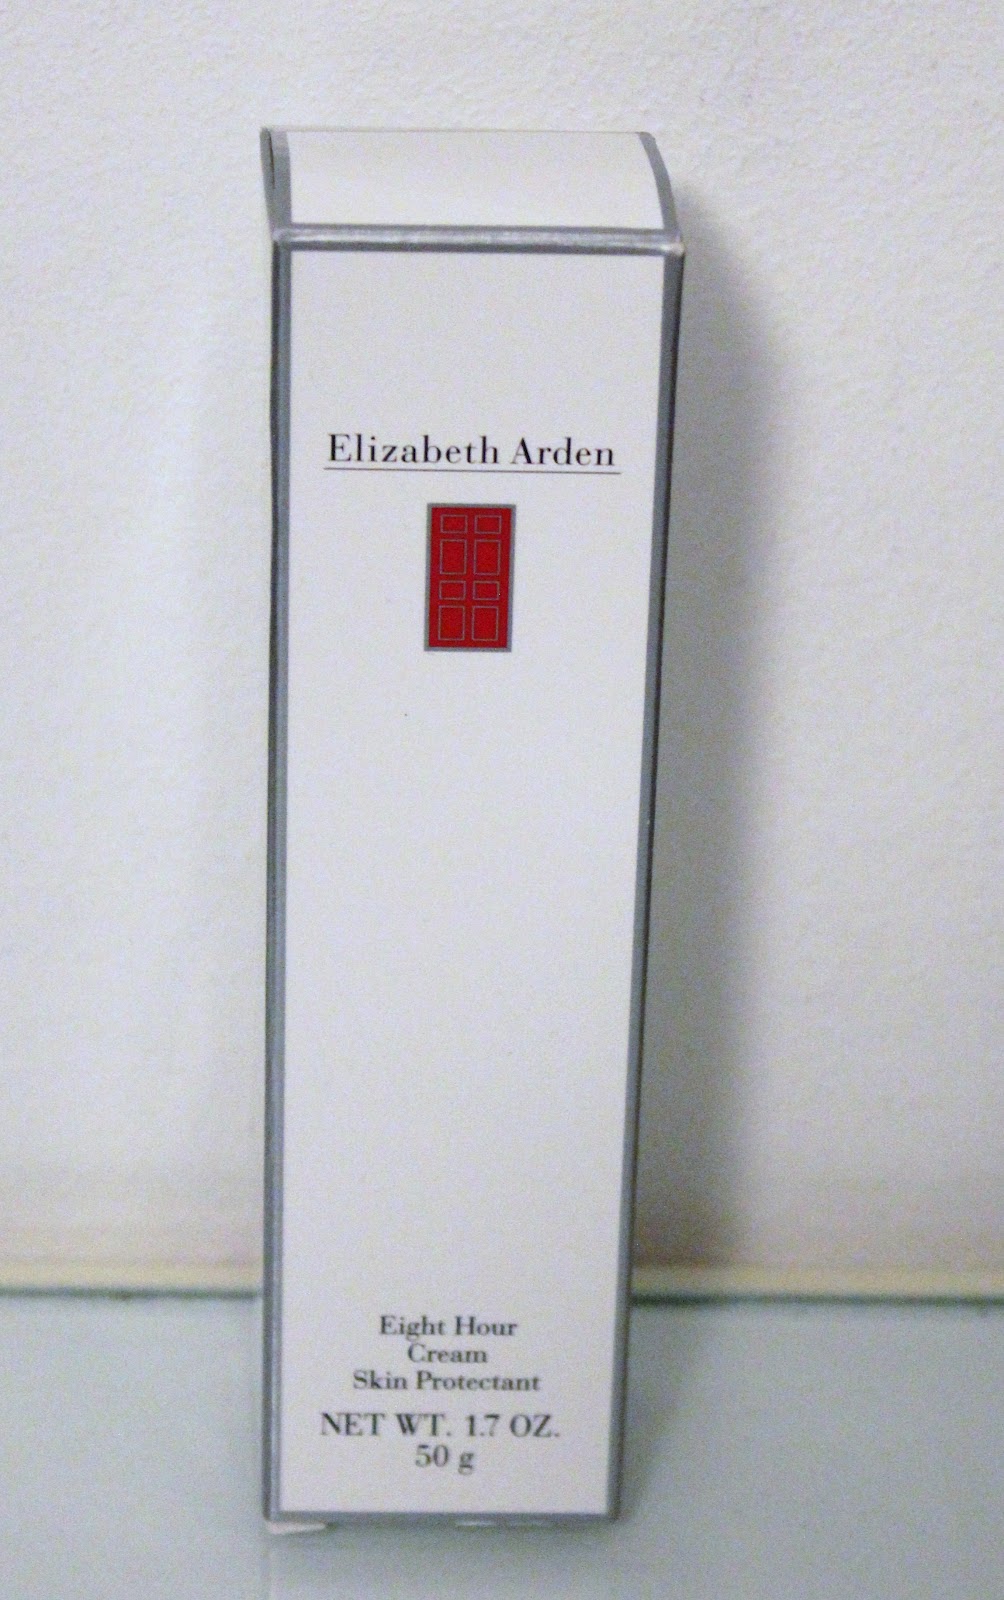 Review: Elizabeth Arden 8 Hour Cream